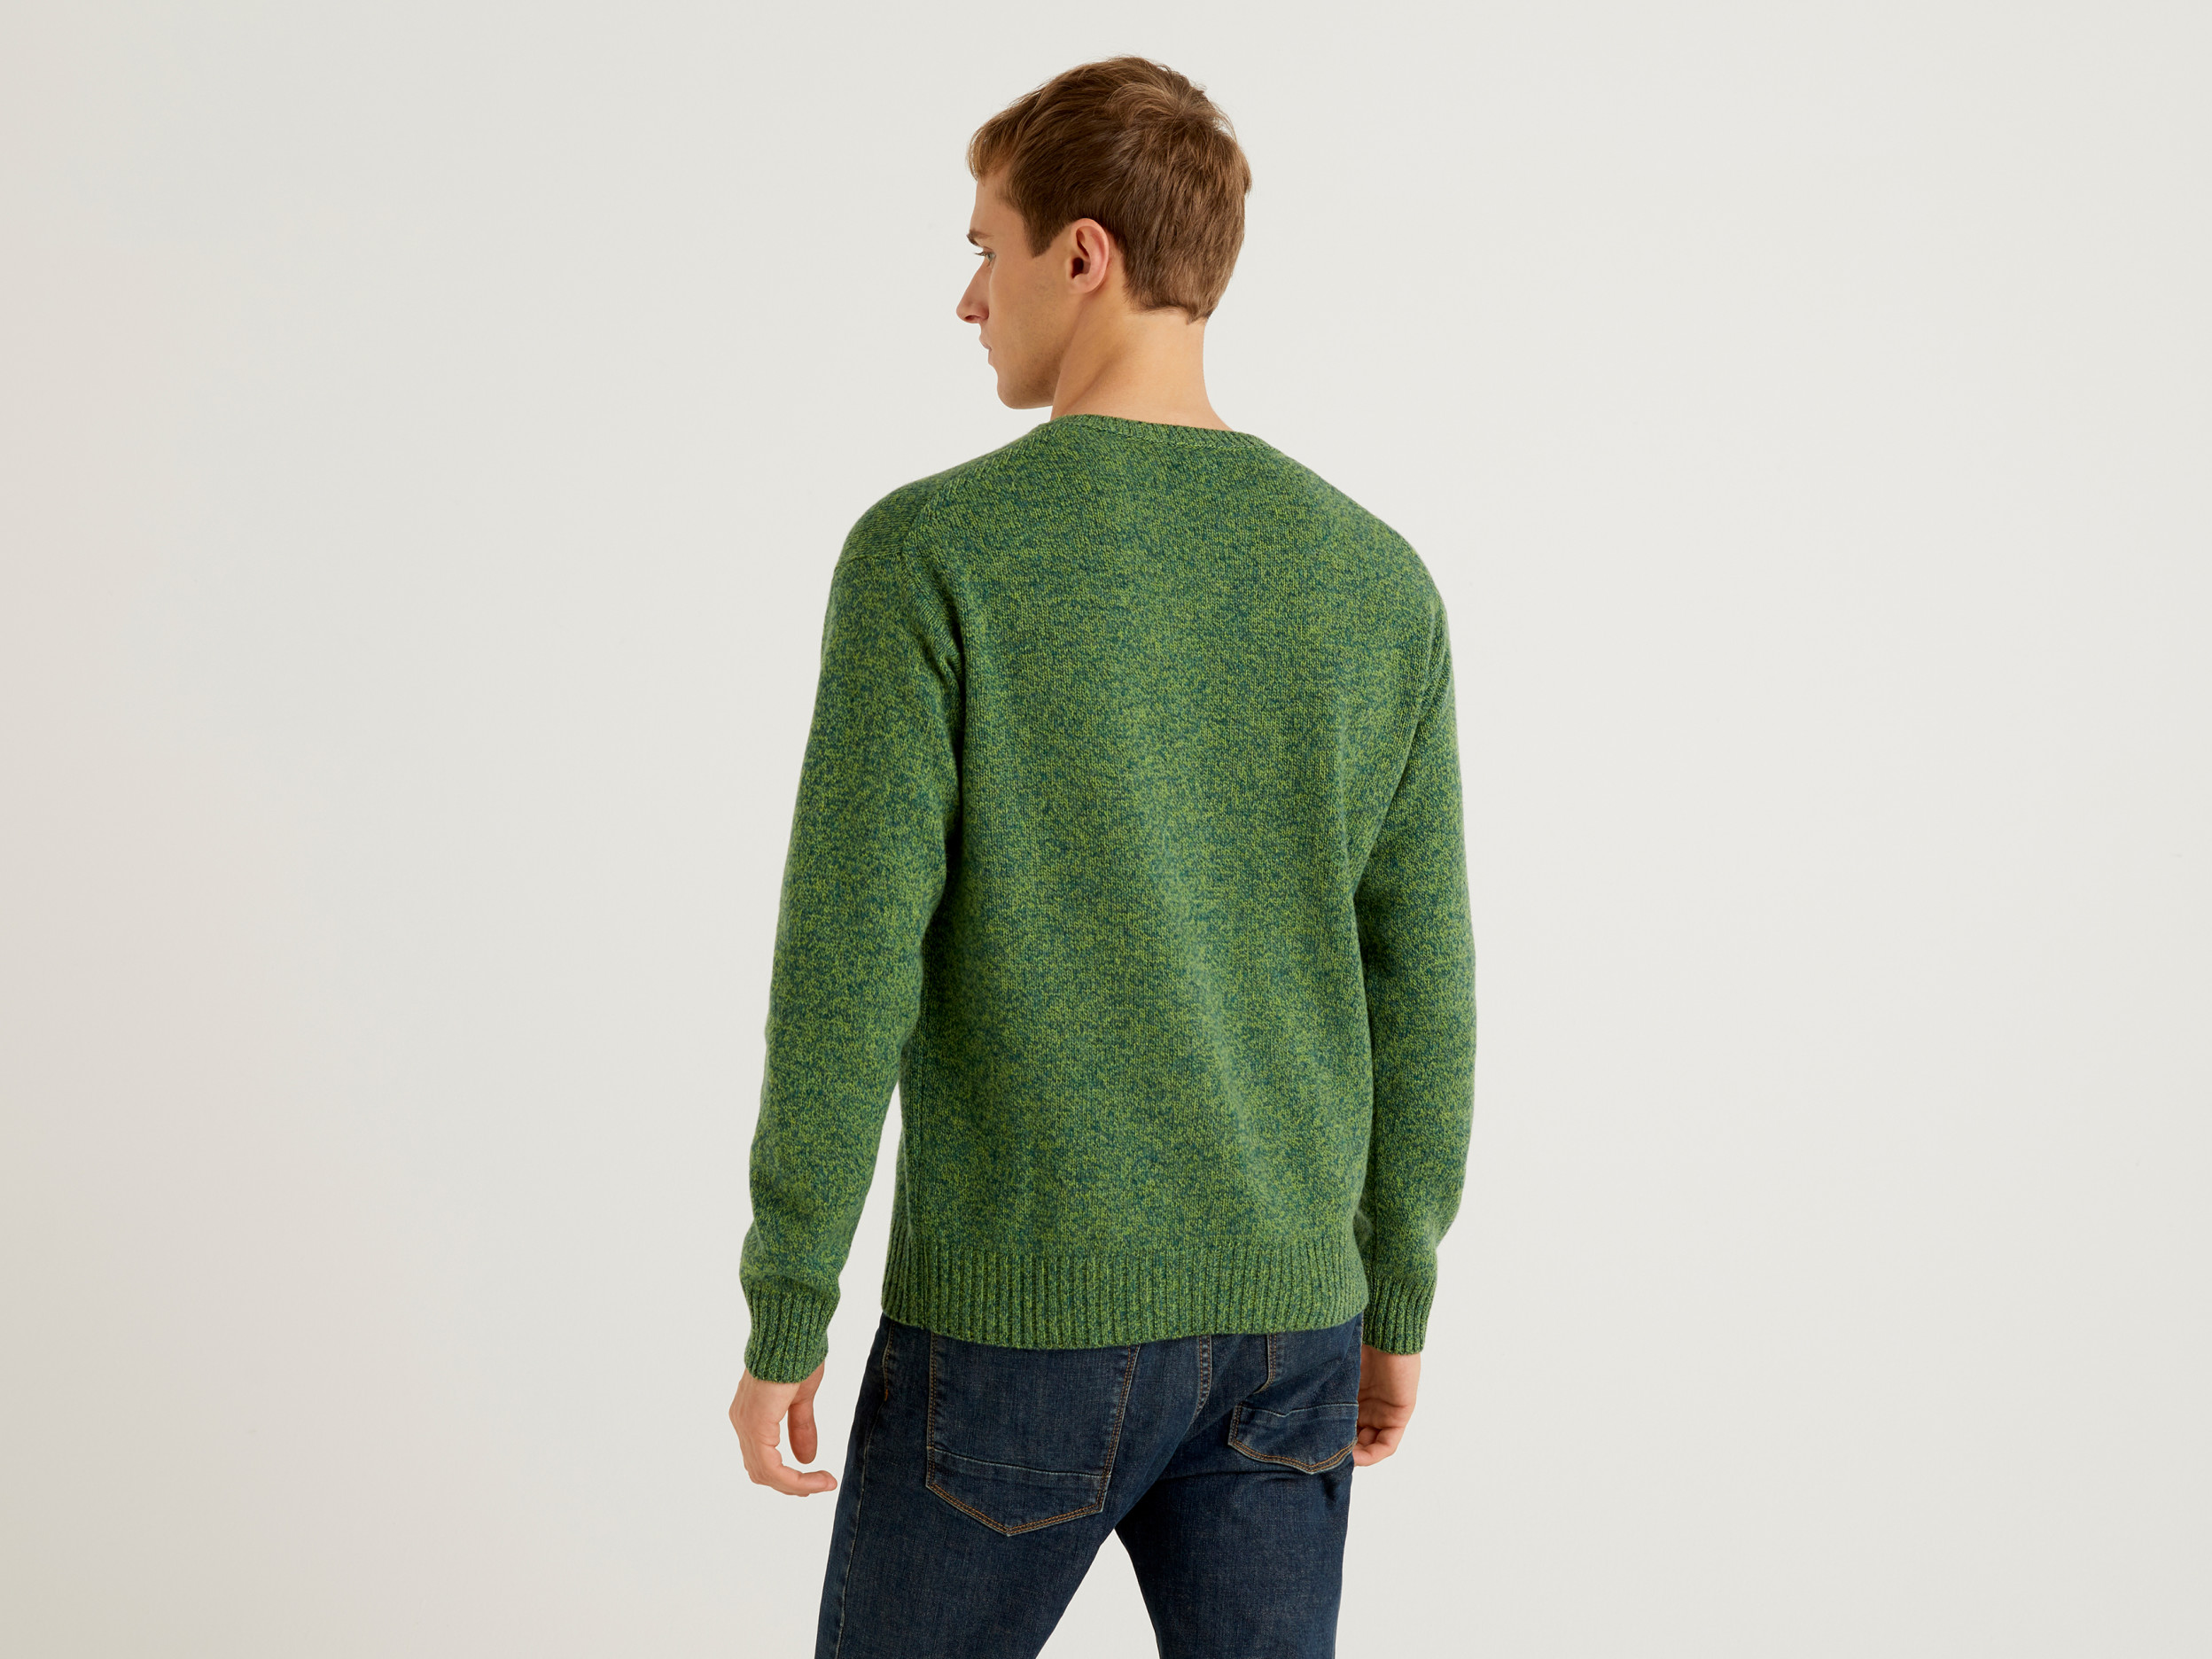 Benetton, Crew Neck Sweater In Pure Shetland Wool, Taglia Xxl, Green, Men